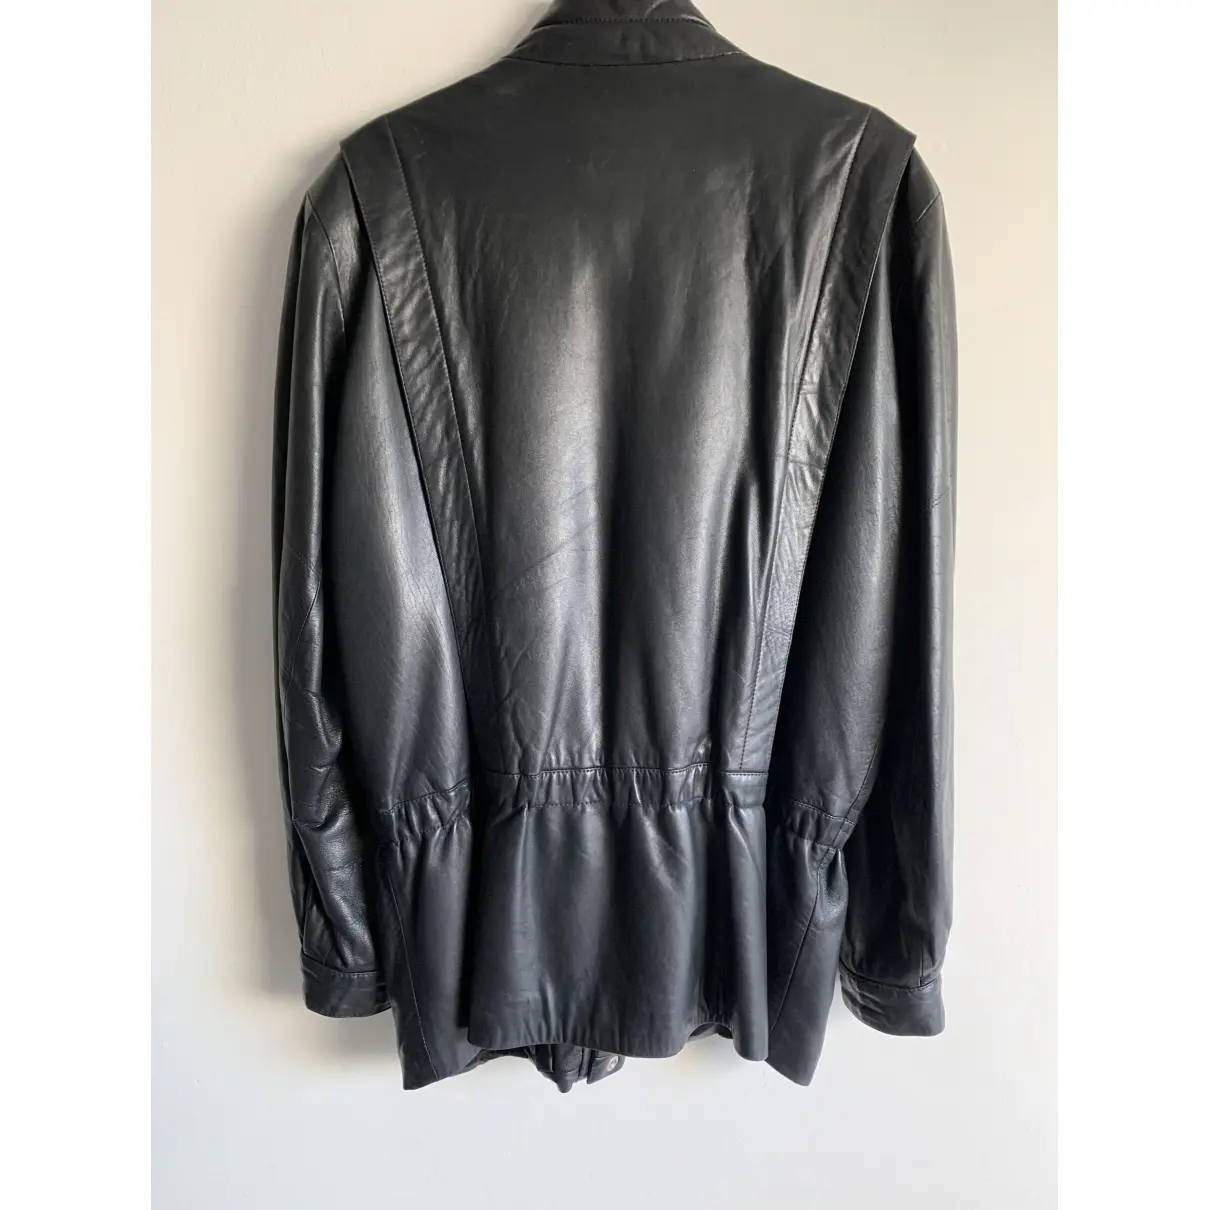 Buy Claude Montana Leather jacket online - Vintage